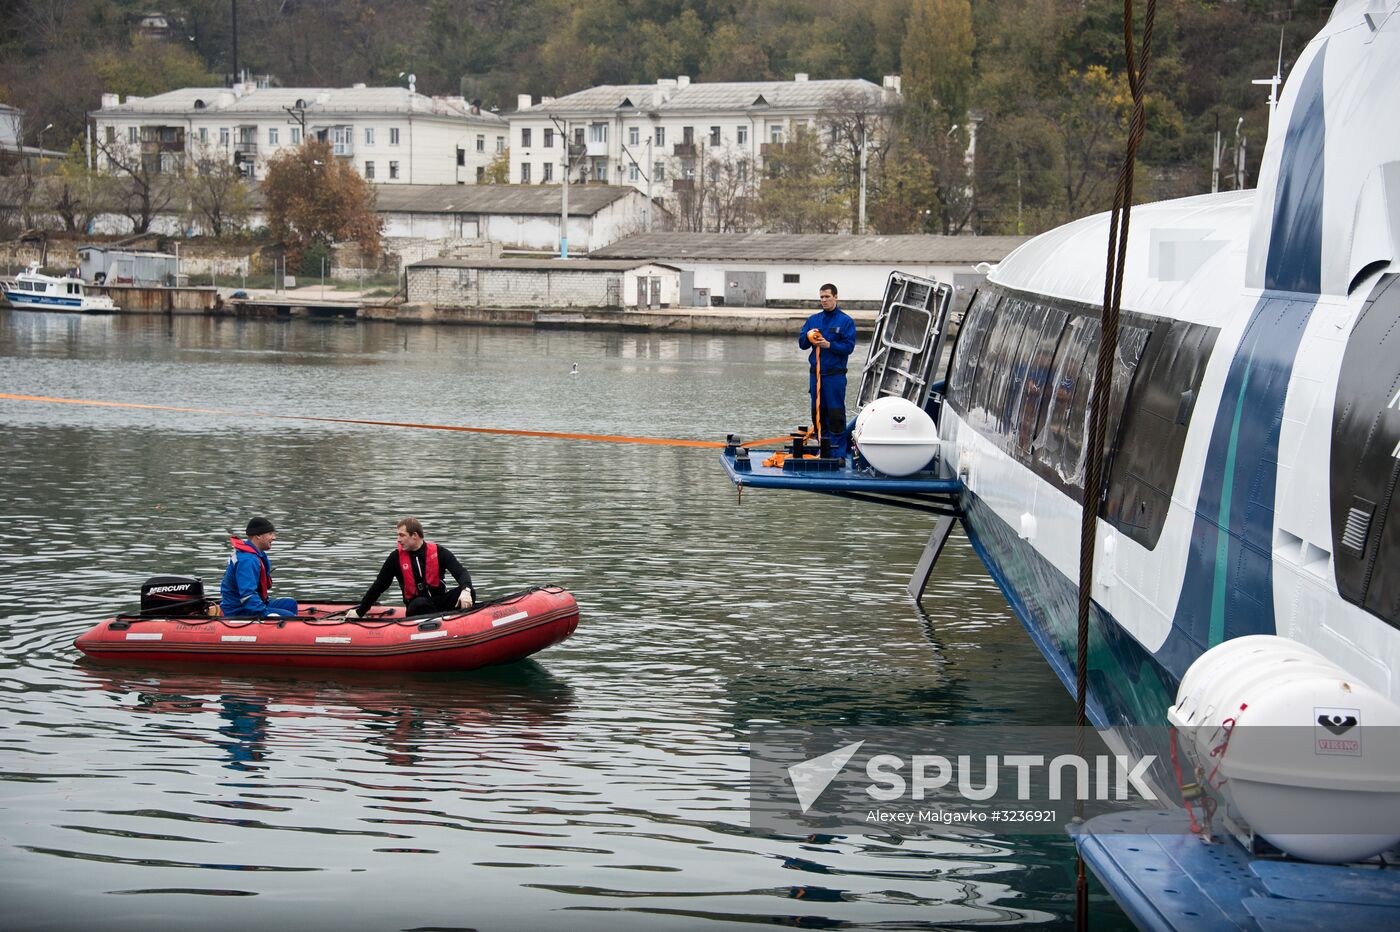 Kometa sea passenger vessel floated out in Sevastopol